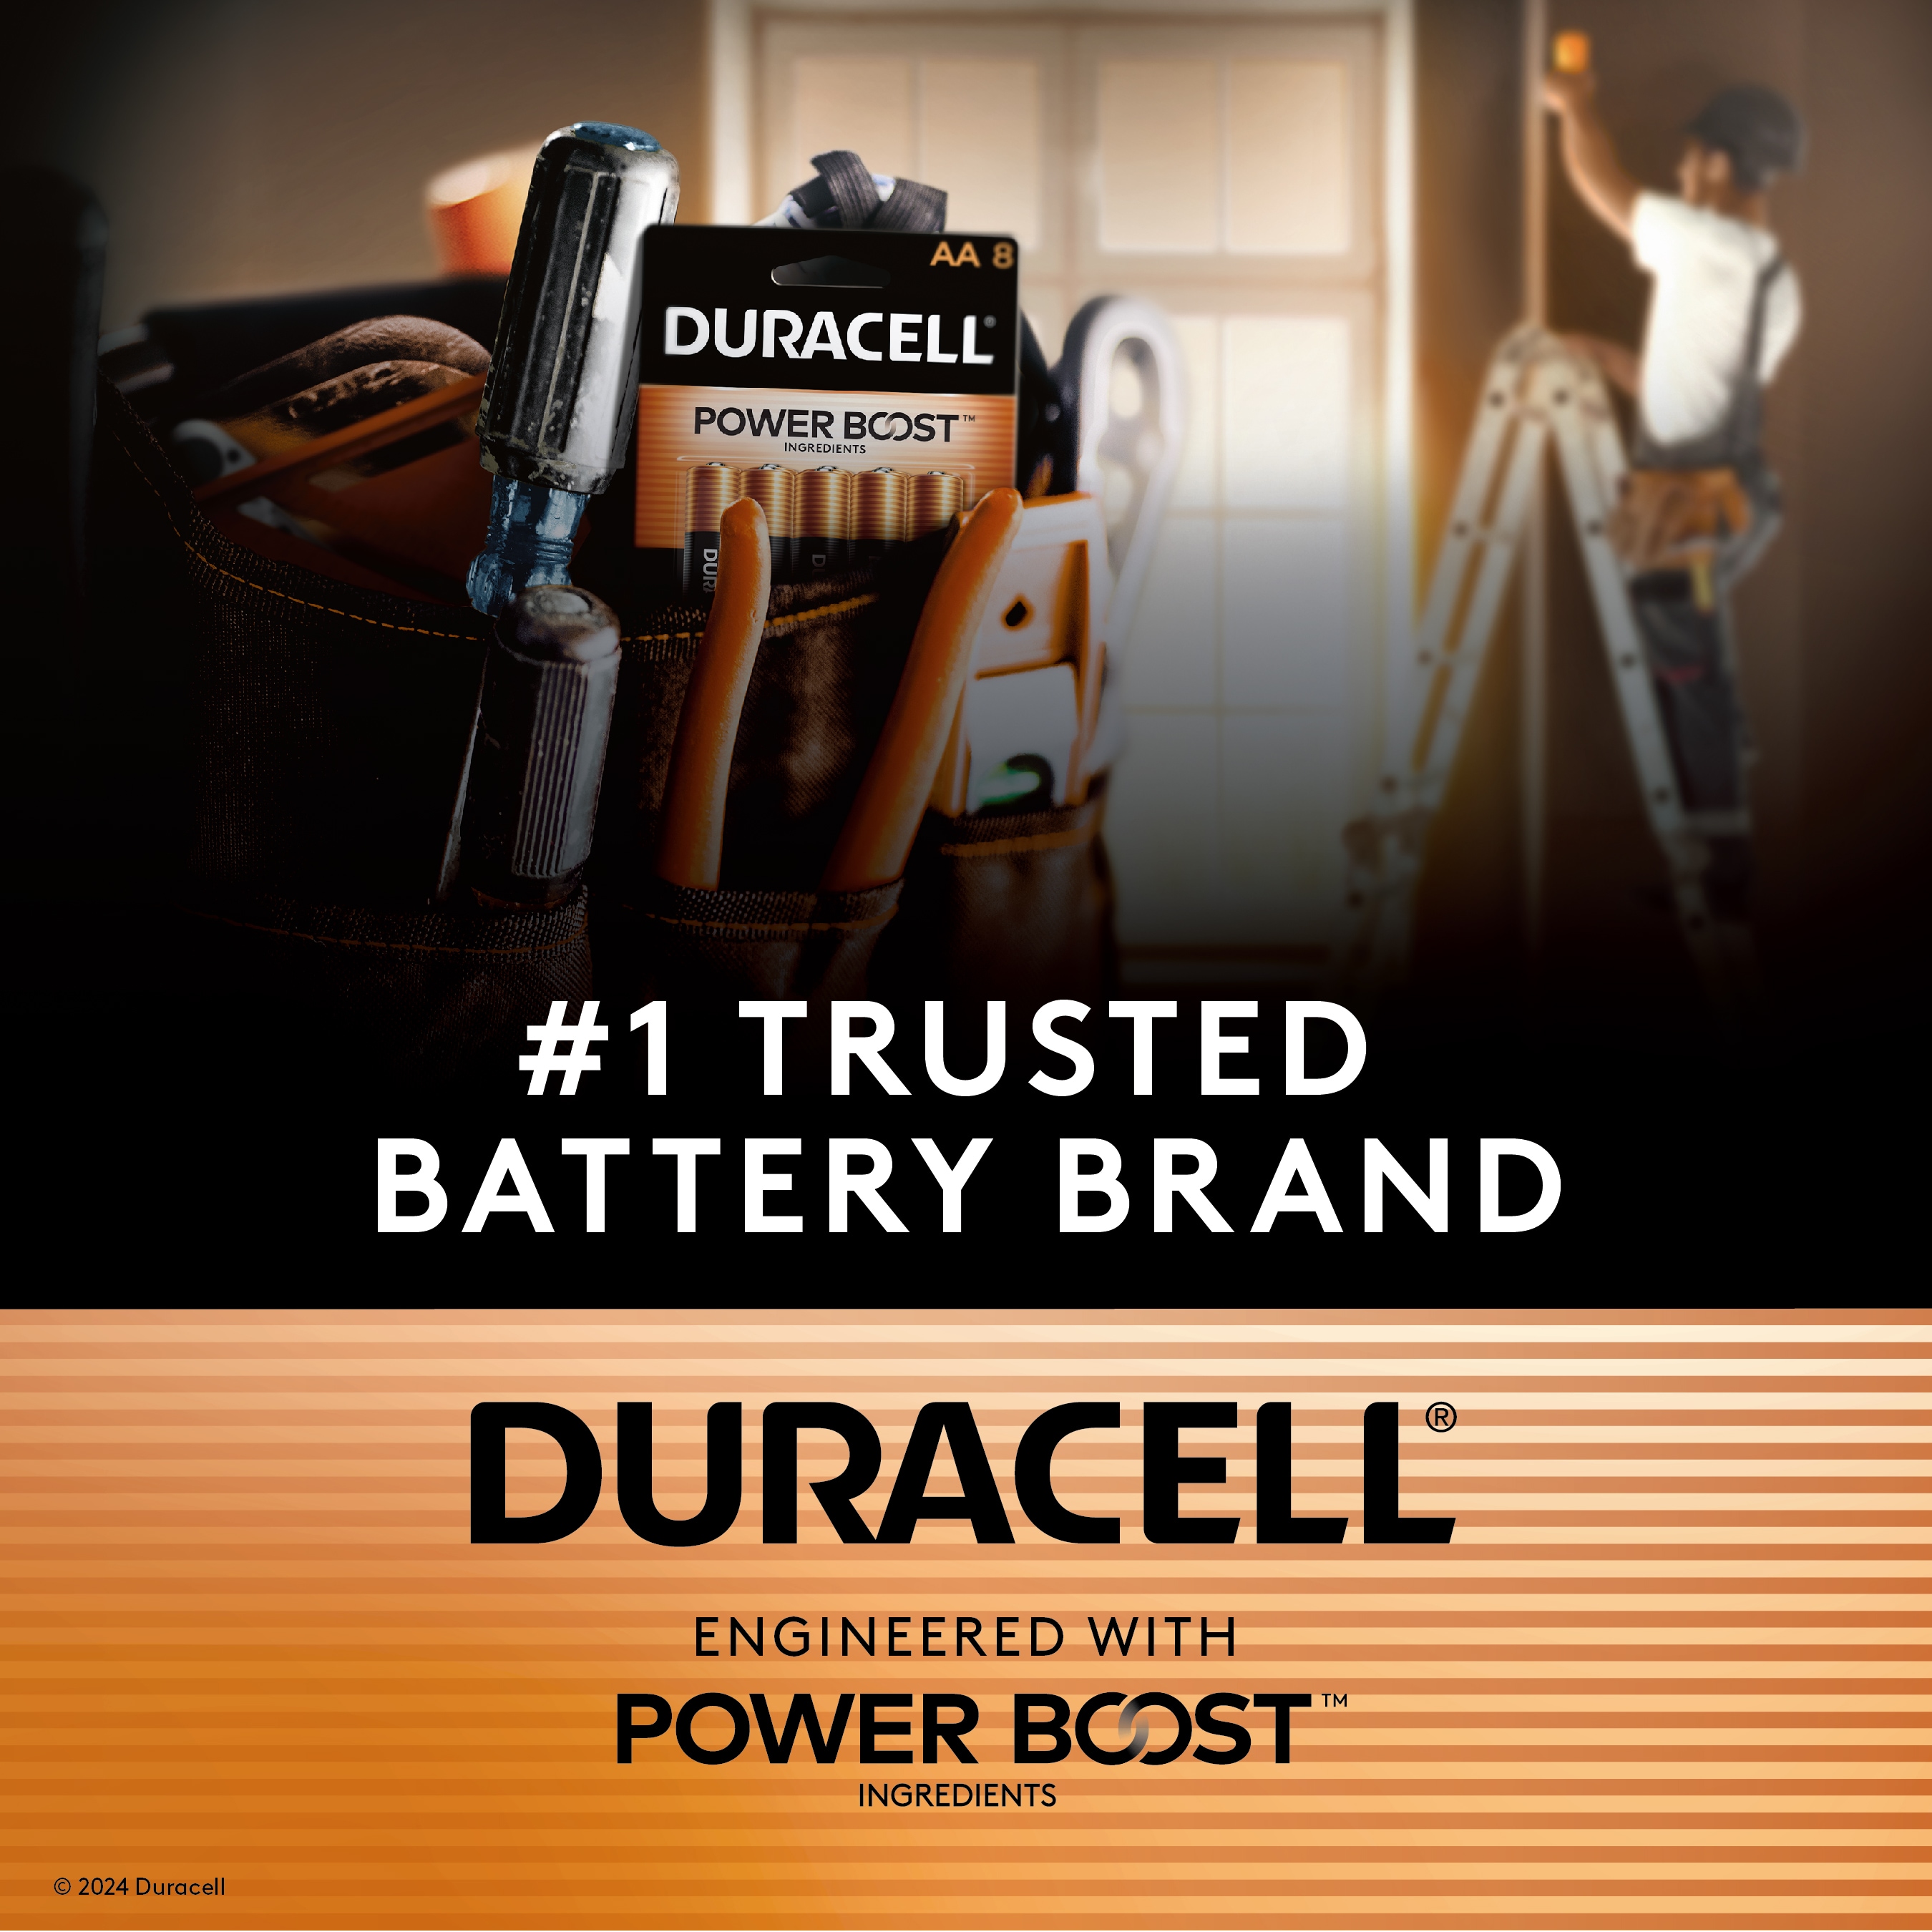 Duracell Coppertop AAA Alkaline Batteries Pack Of 24 - Office Depot